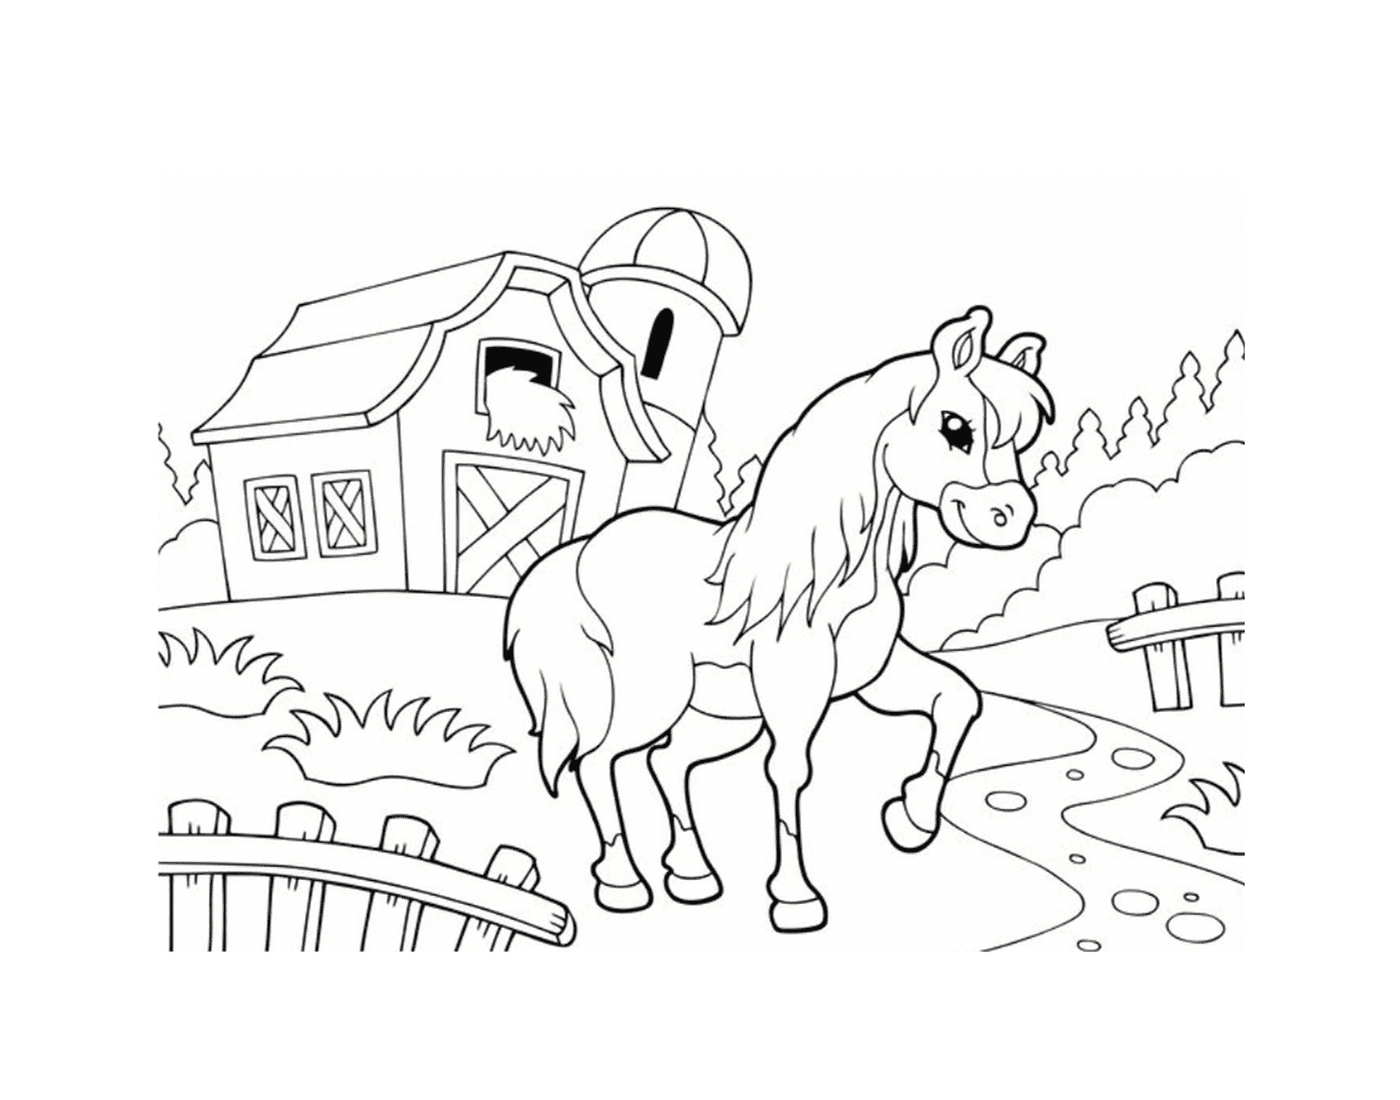  Pony na fazenda, atmosfera do campo 